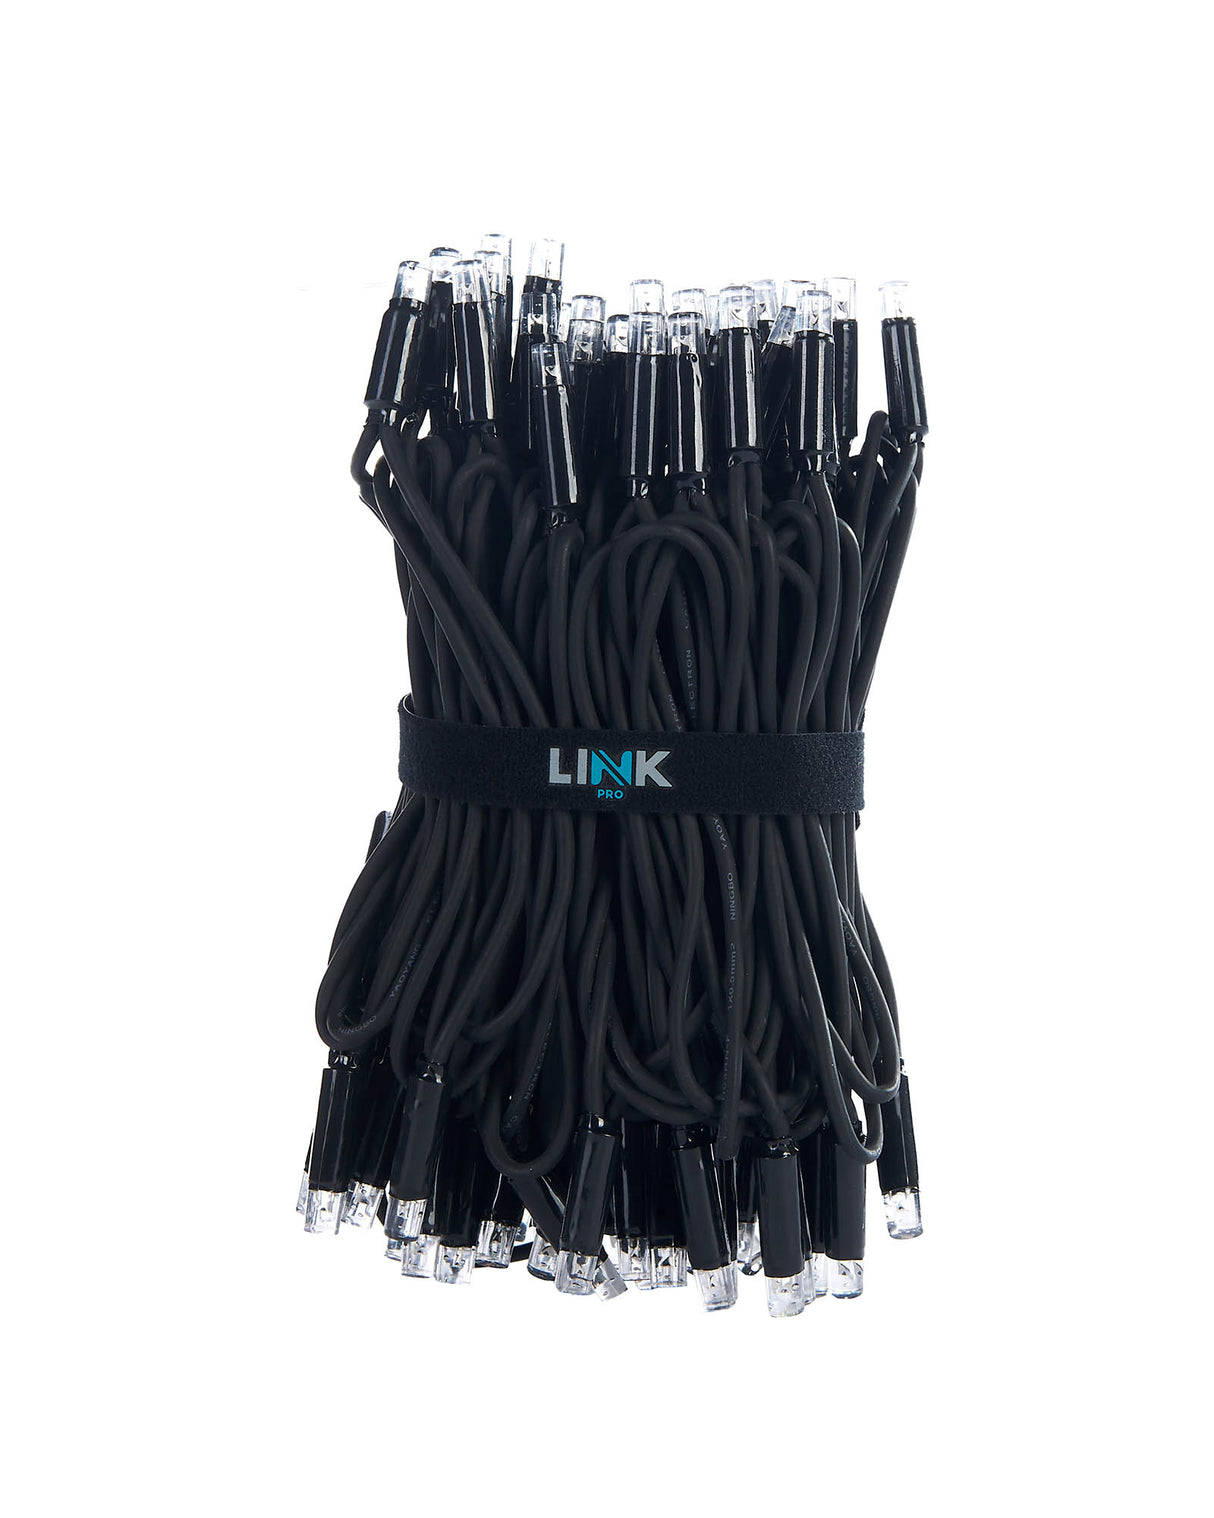 LINK PRO LED String Lights, Black Cable, Warm White